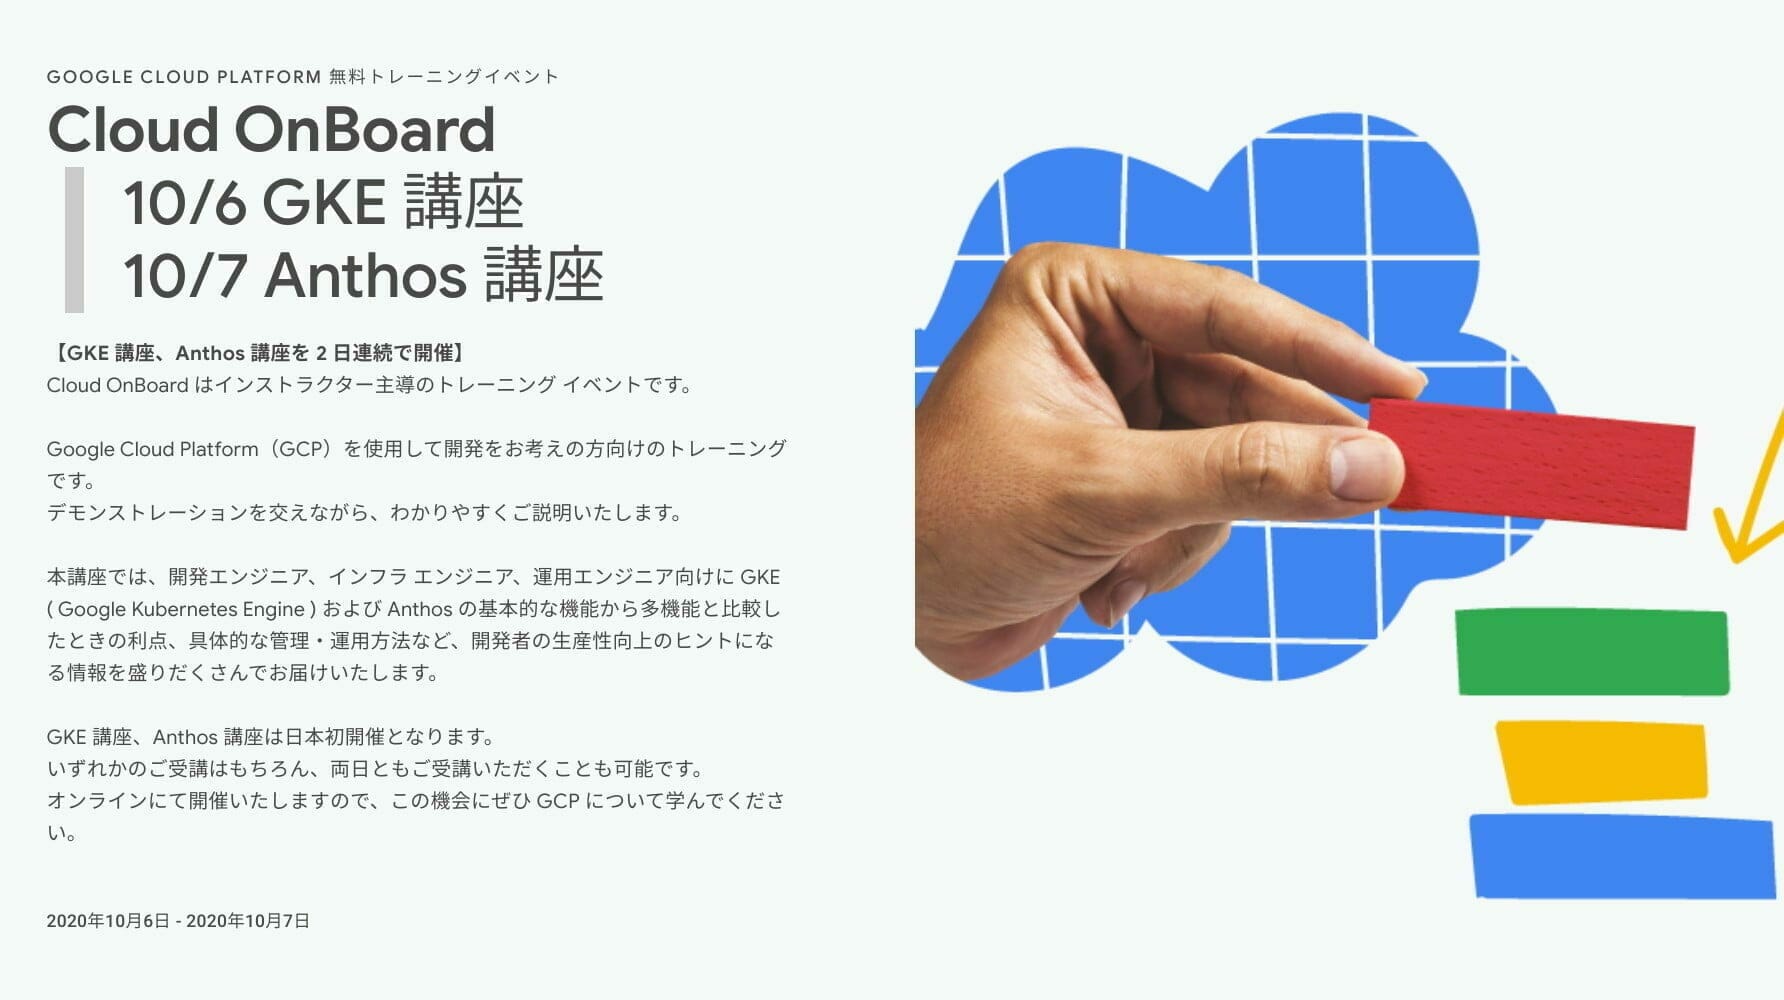 Cloud OnBoard：GKE 講座、Anthos 講座